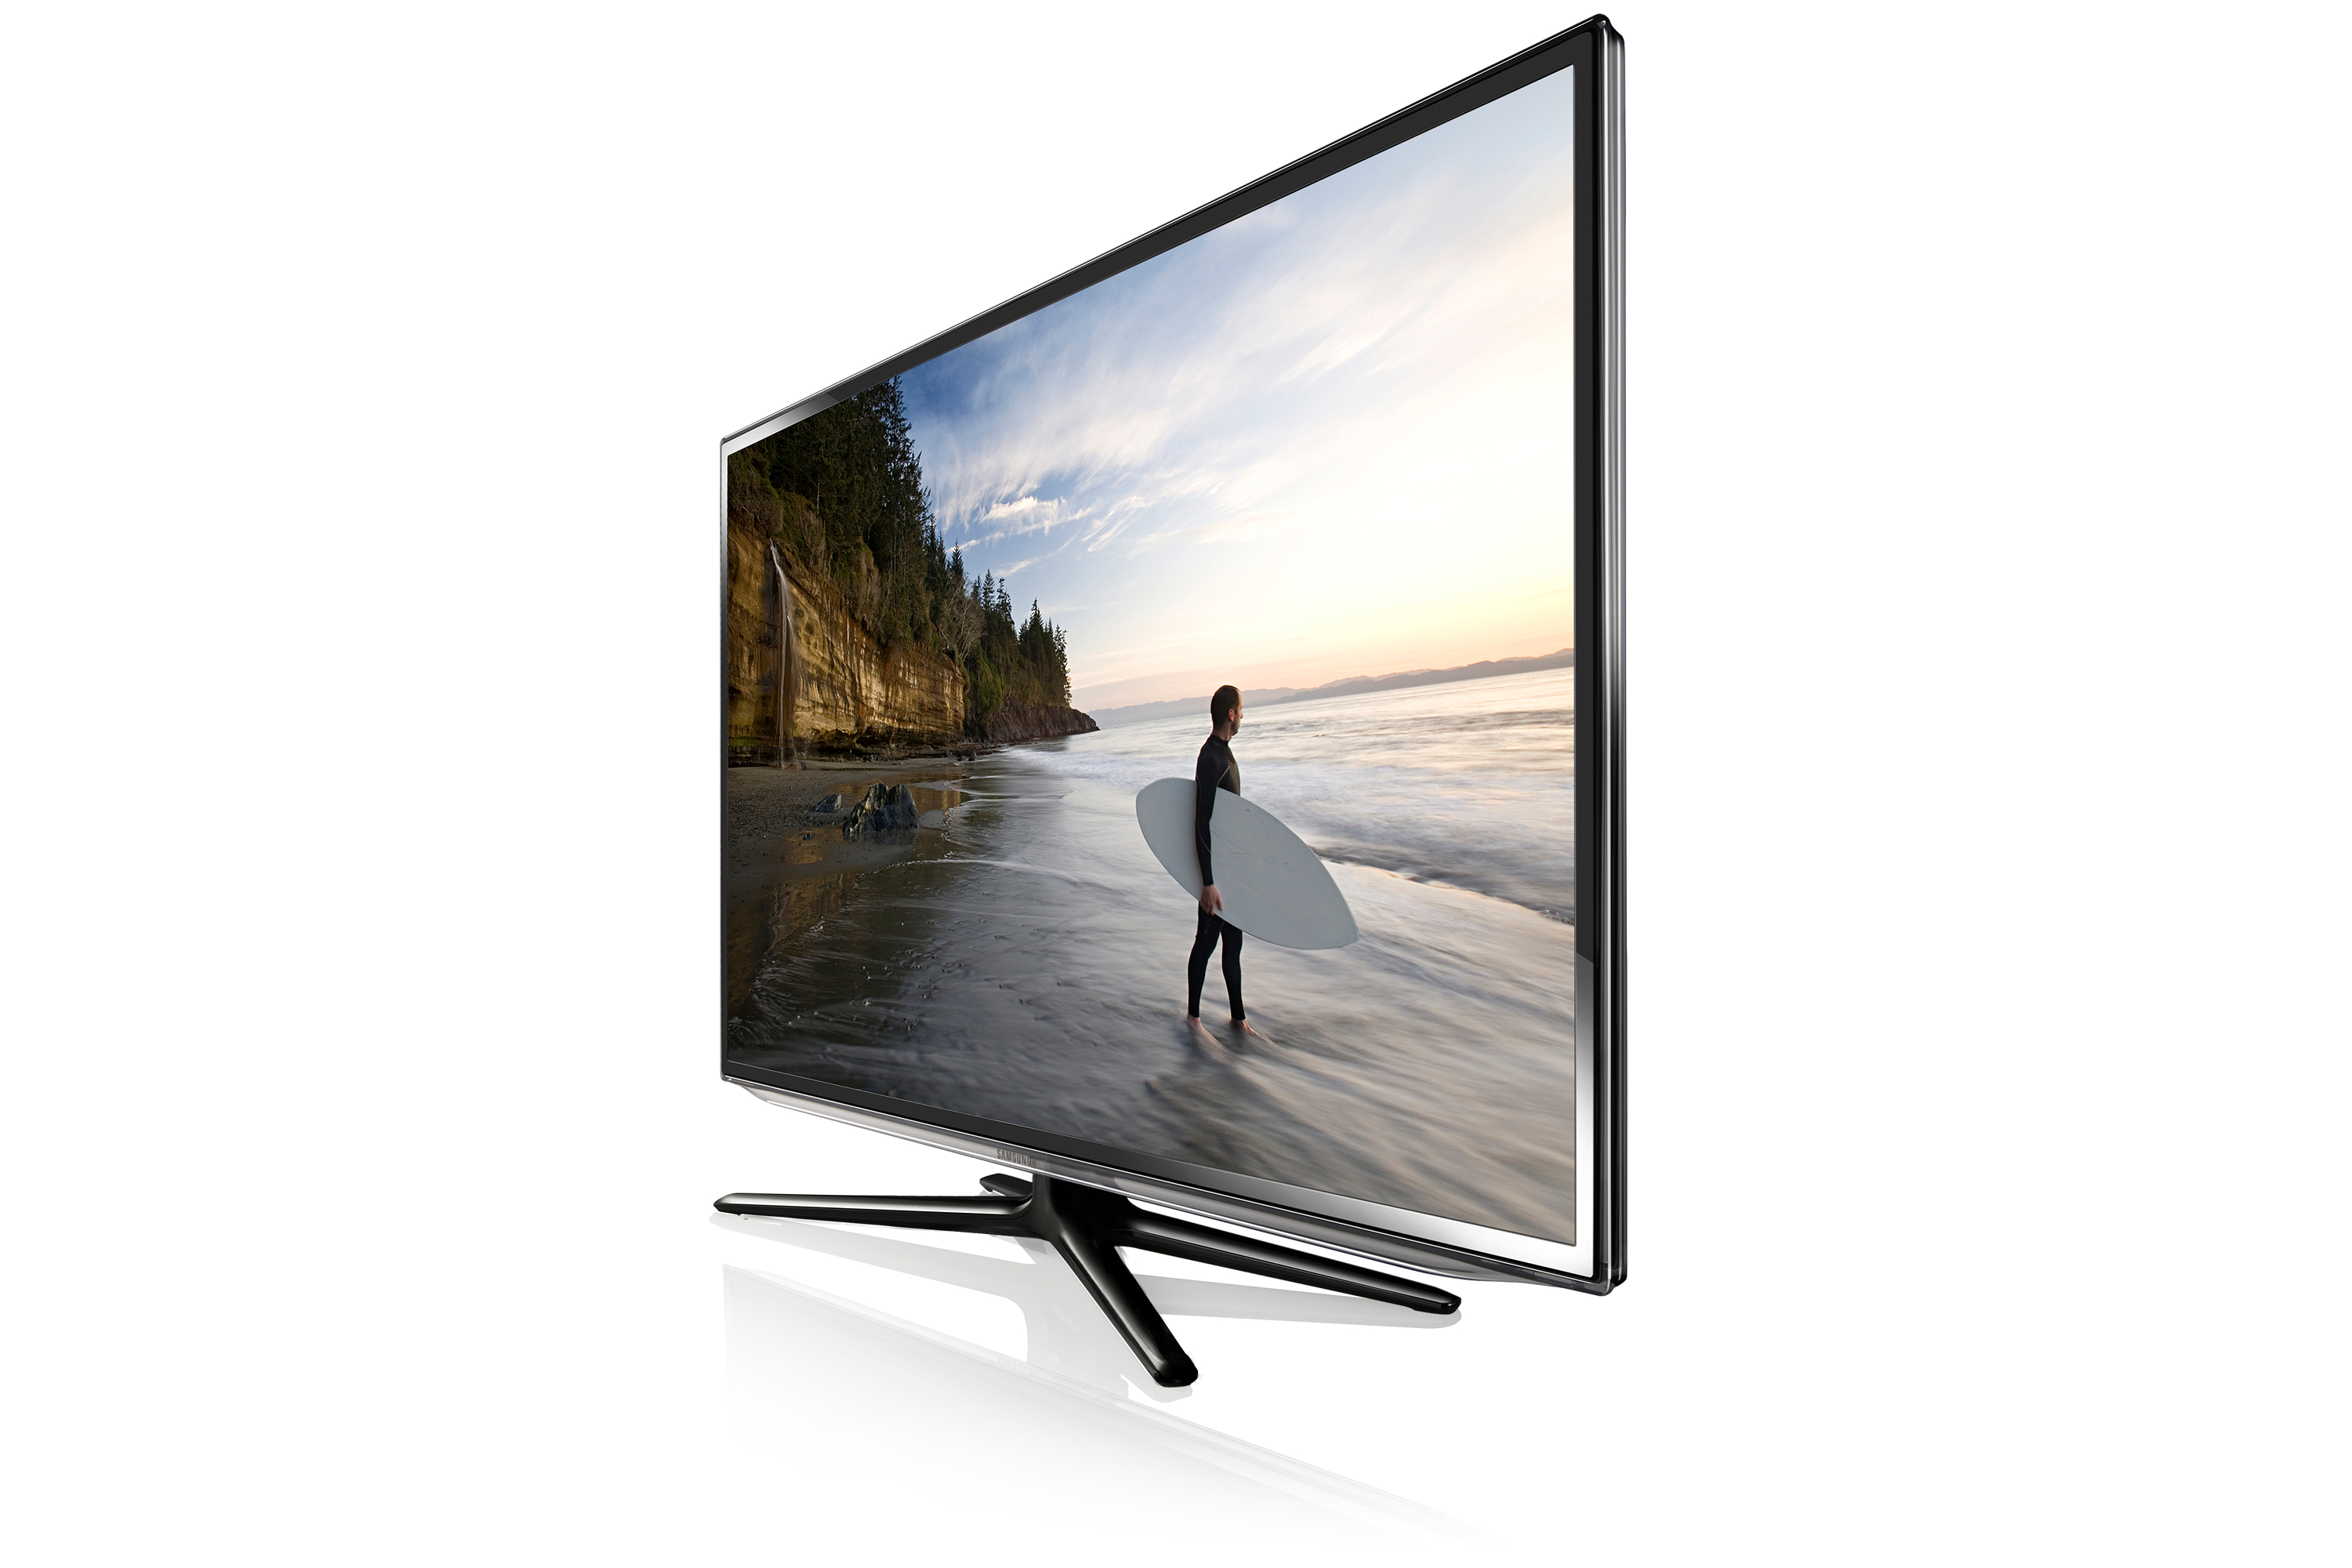 Led телевизоров samsung smart tv. Samsung ue32es6100. Samsung ue40es6100 led. Самсунг led 40 смарт ТВ. Samsung led 32 Smart TV.